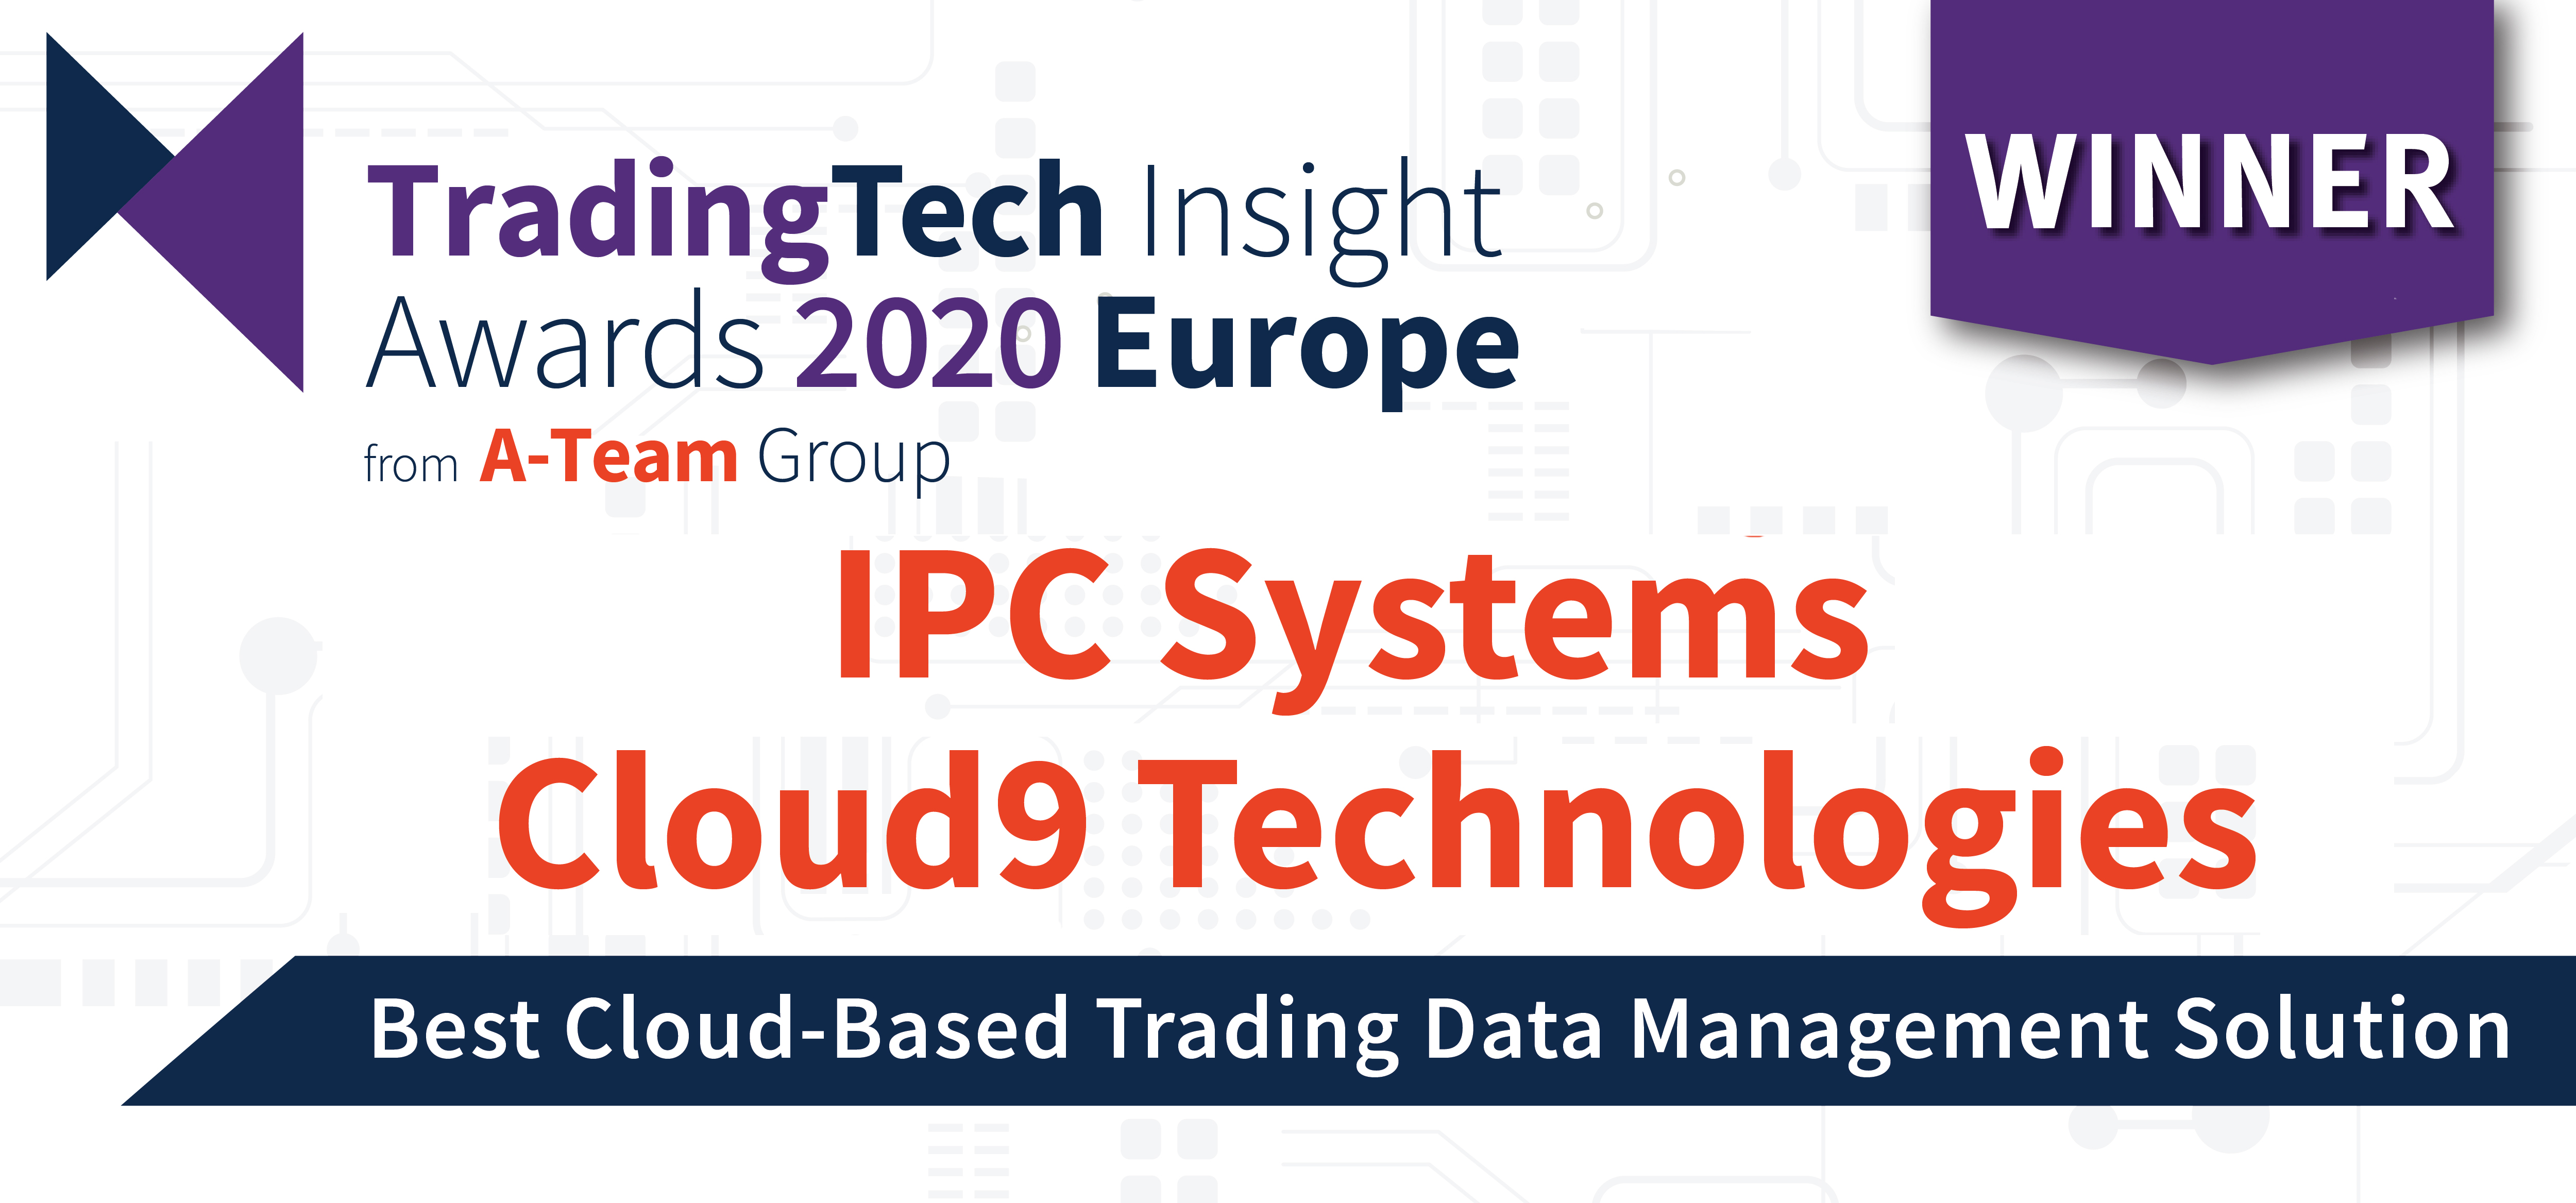 “Best Cloud-Based Trading Data Management Solution” – TradingTech Insight Awards Europe 2020